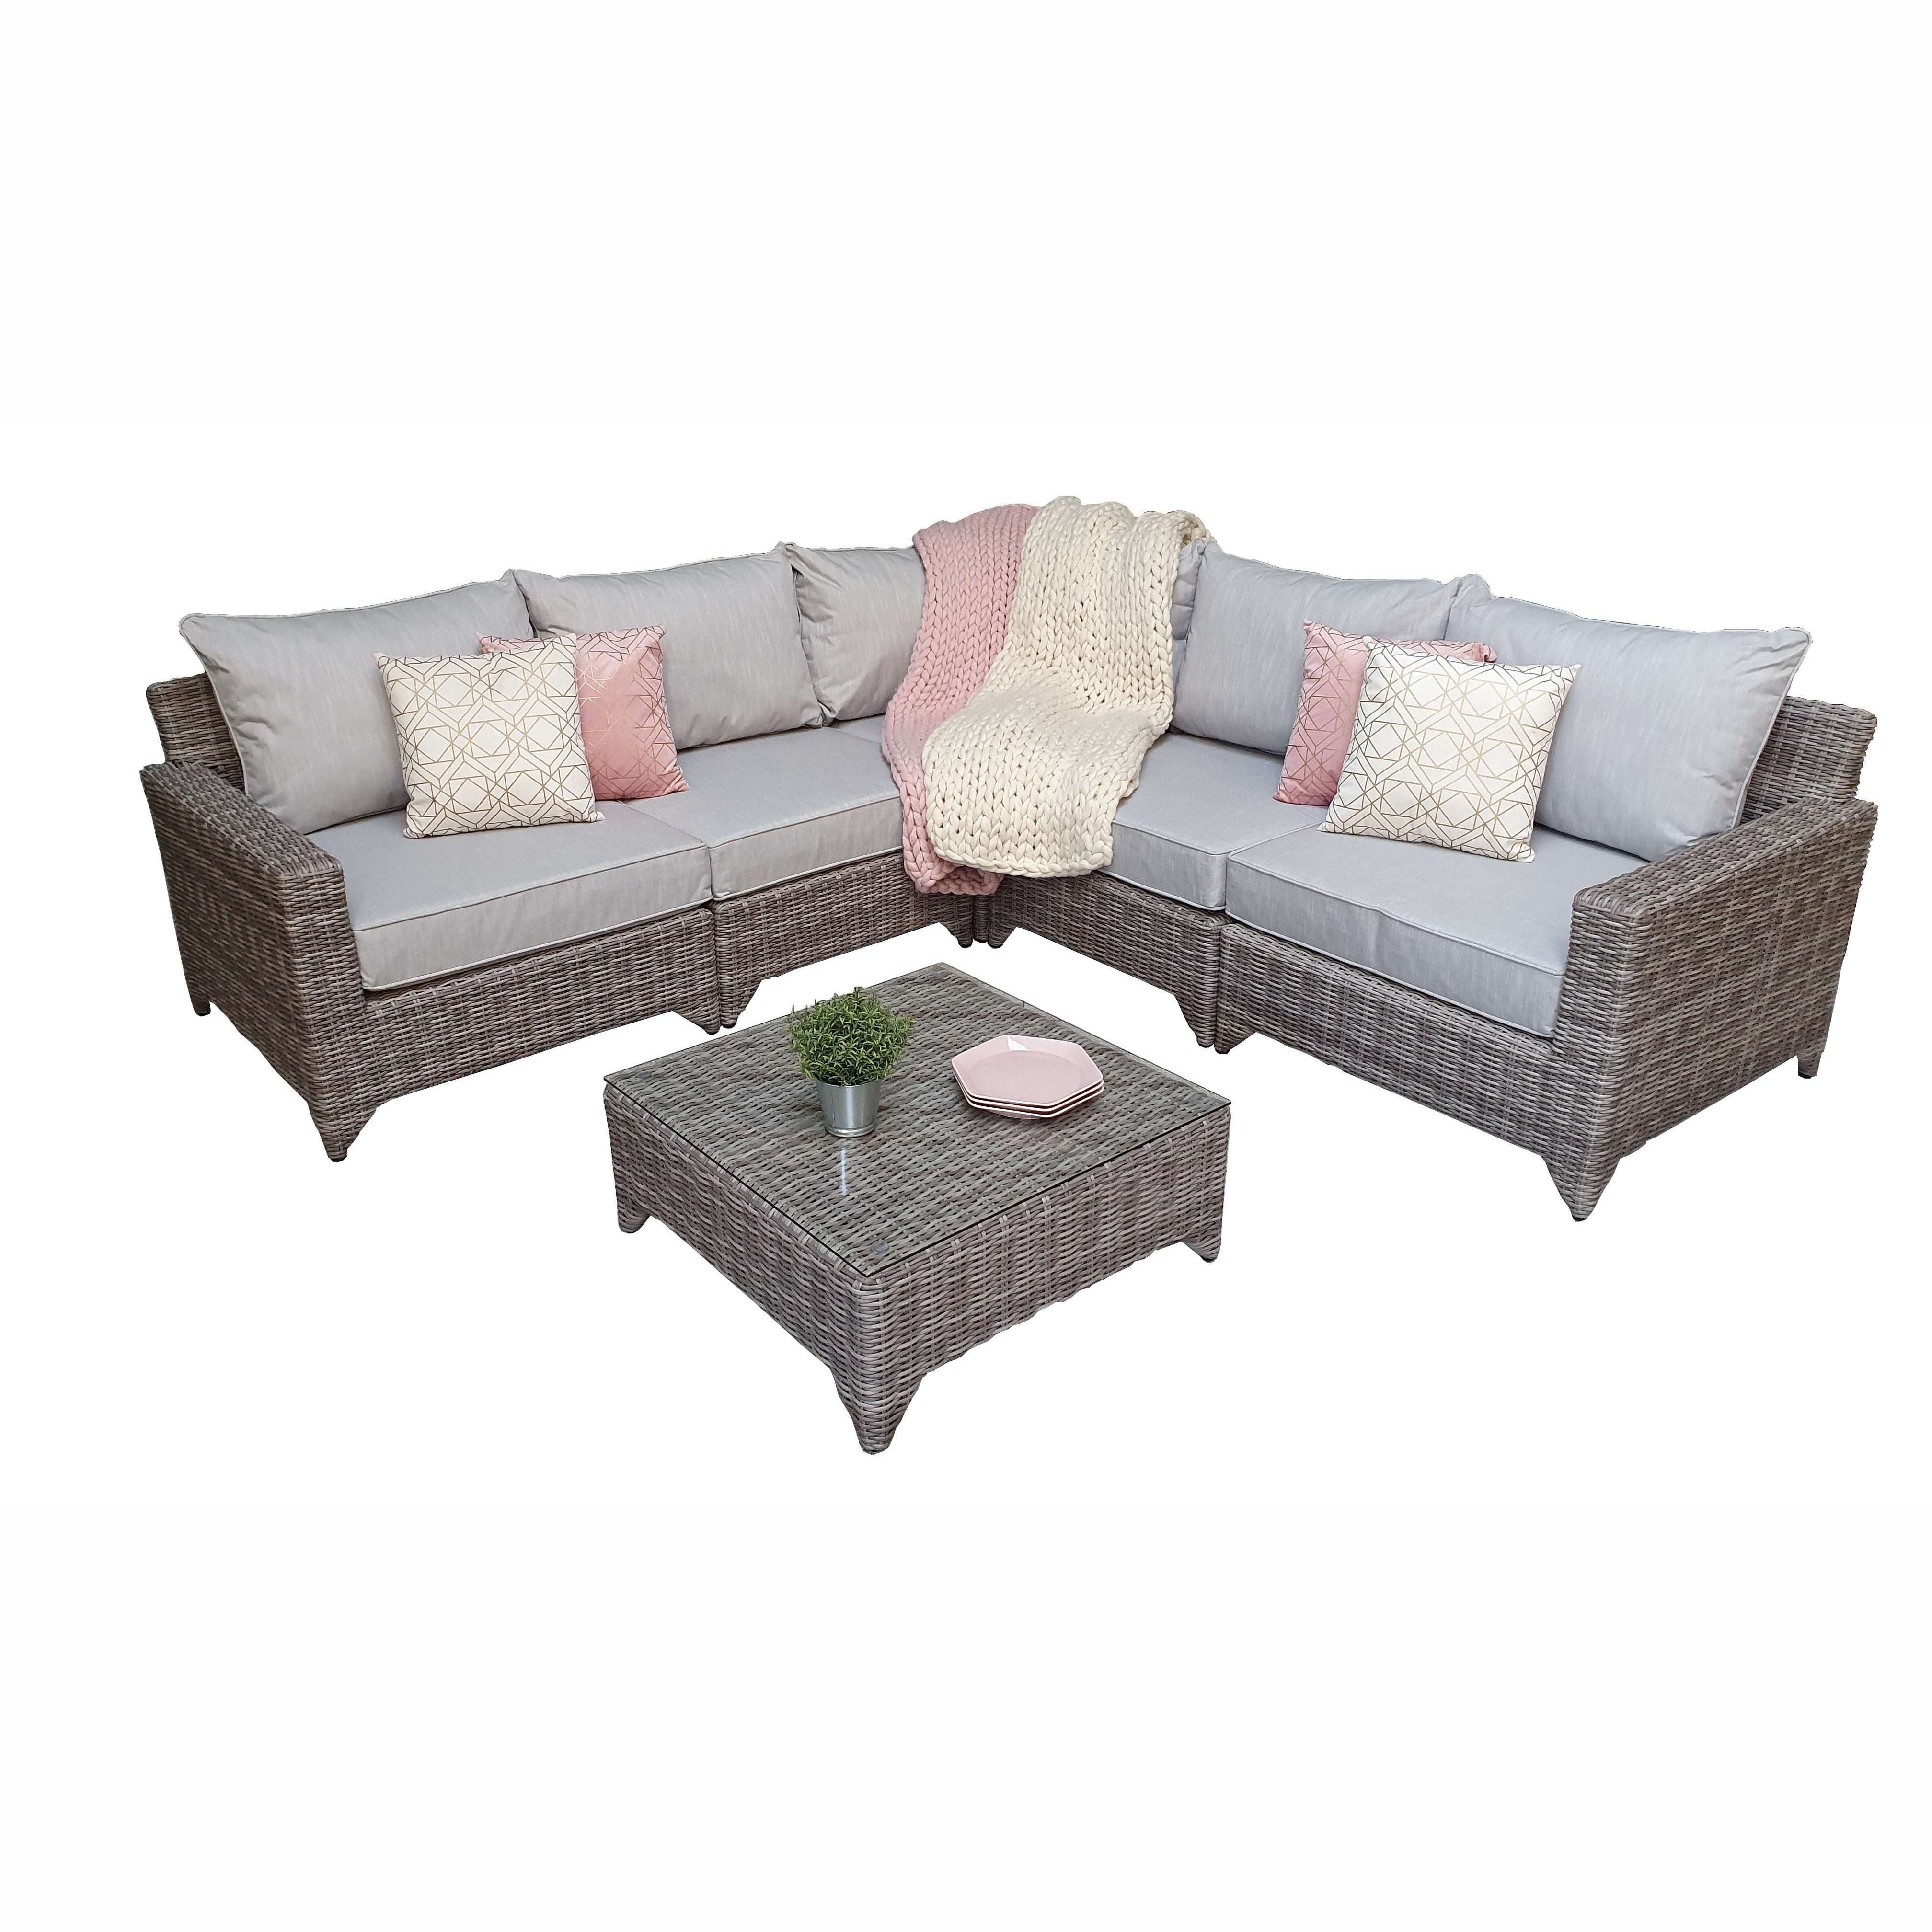 Exceptional Garden:Signature Weave Helena Modular Corner Sofa Set